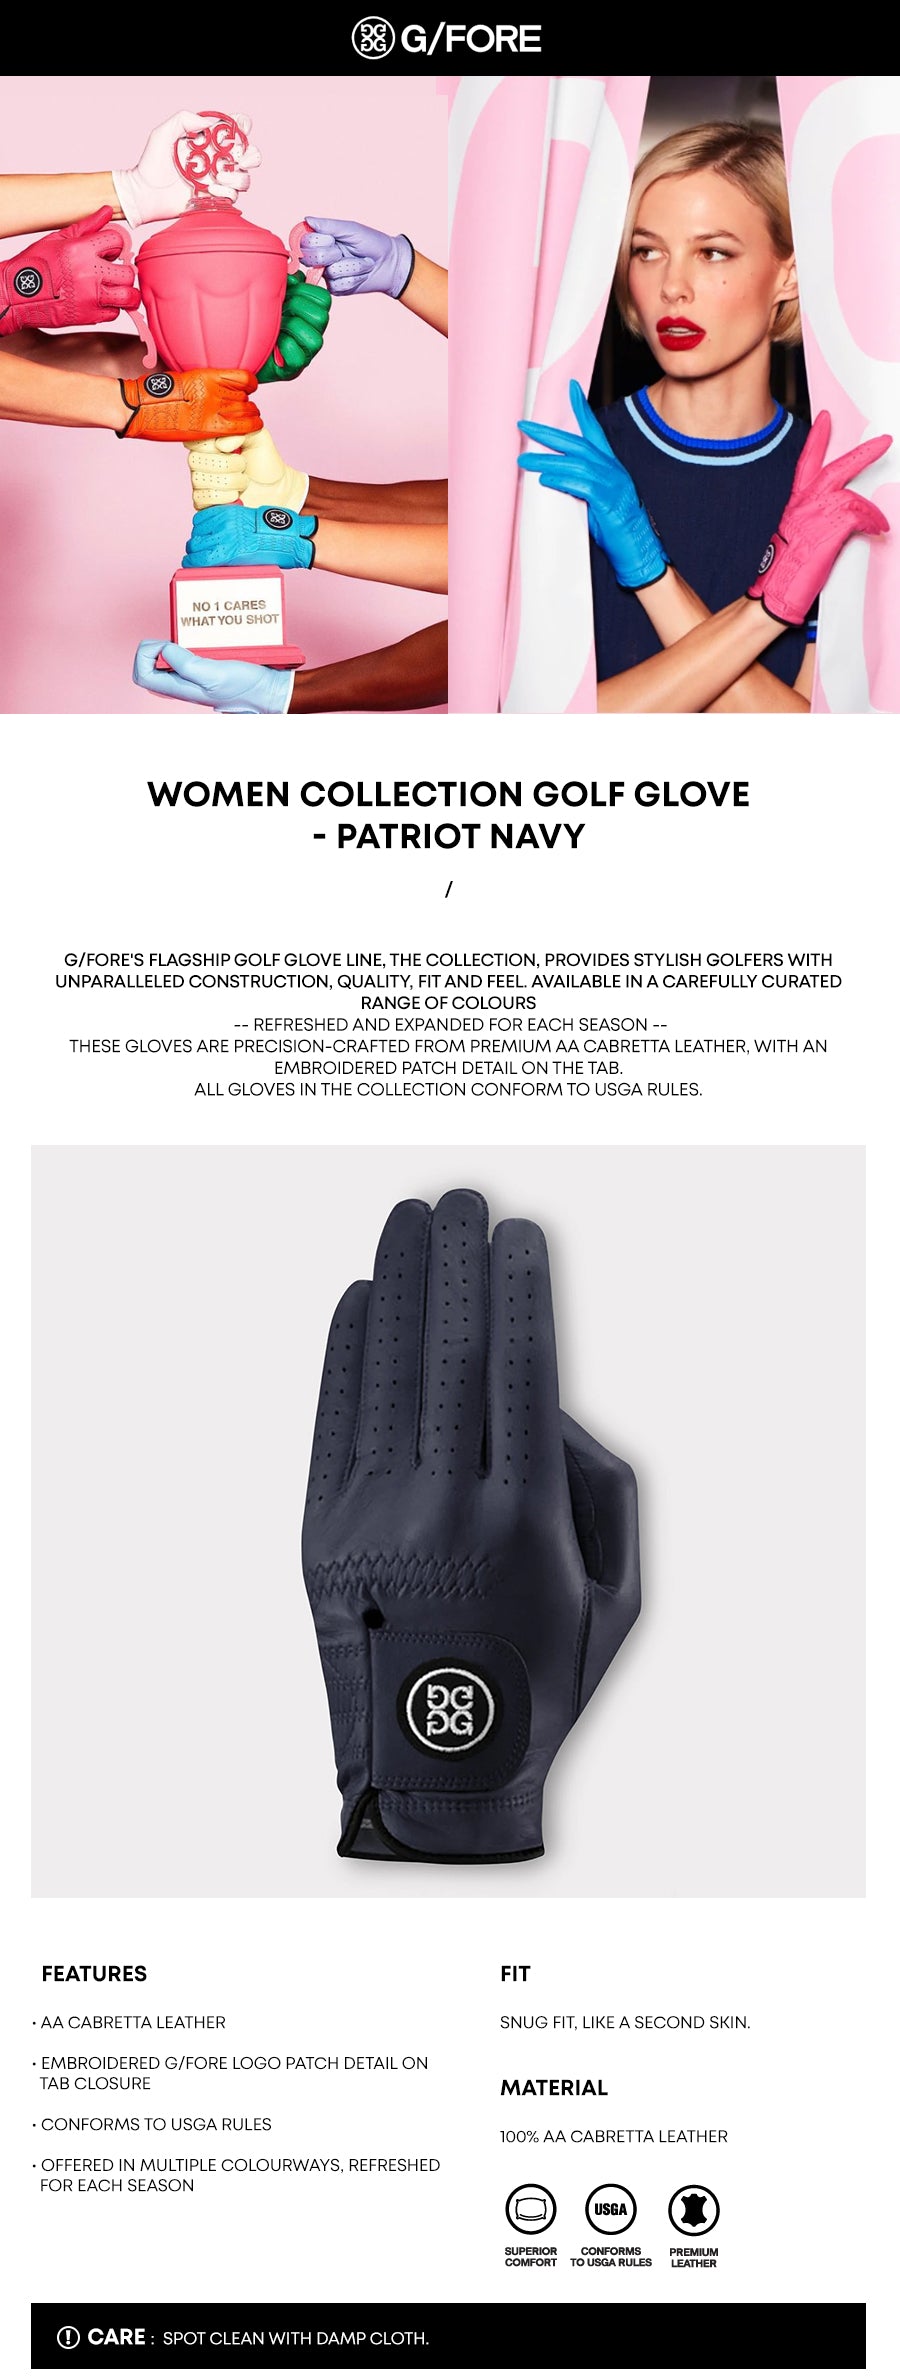 gfore-women-collection-golf-glove-patriot-navy